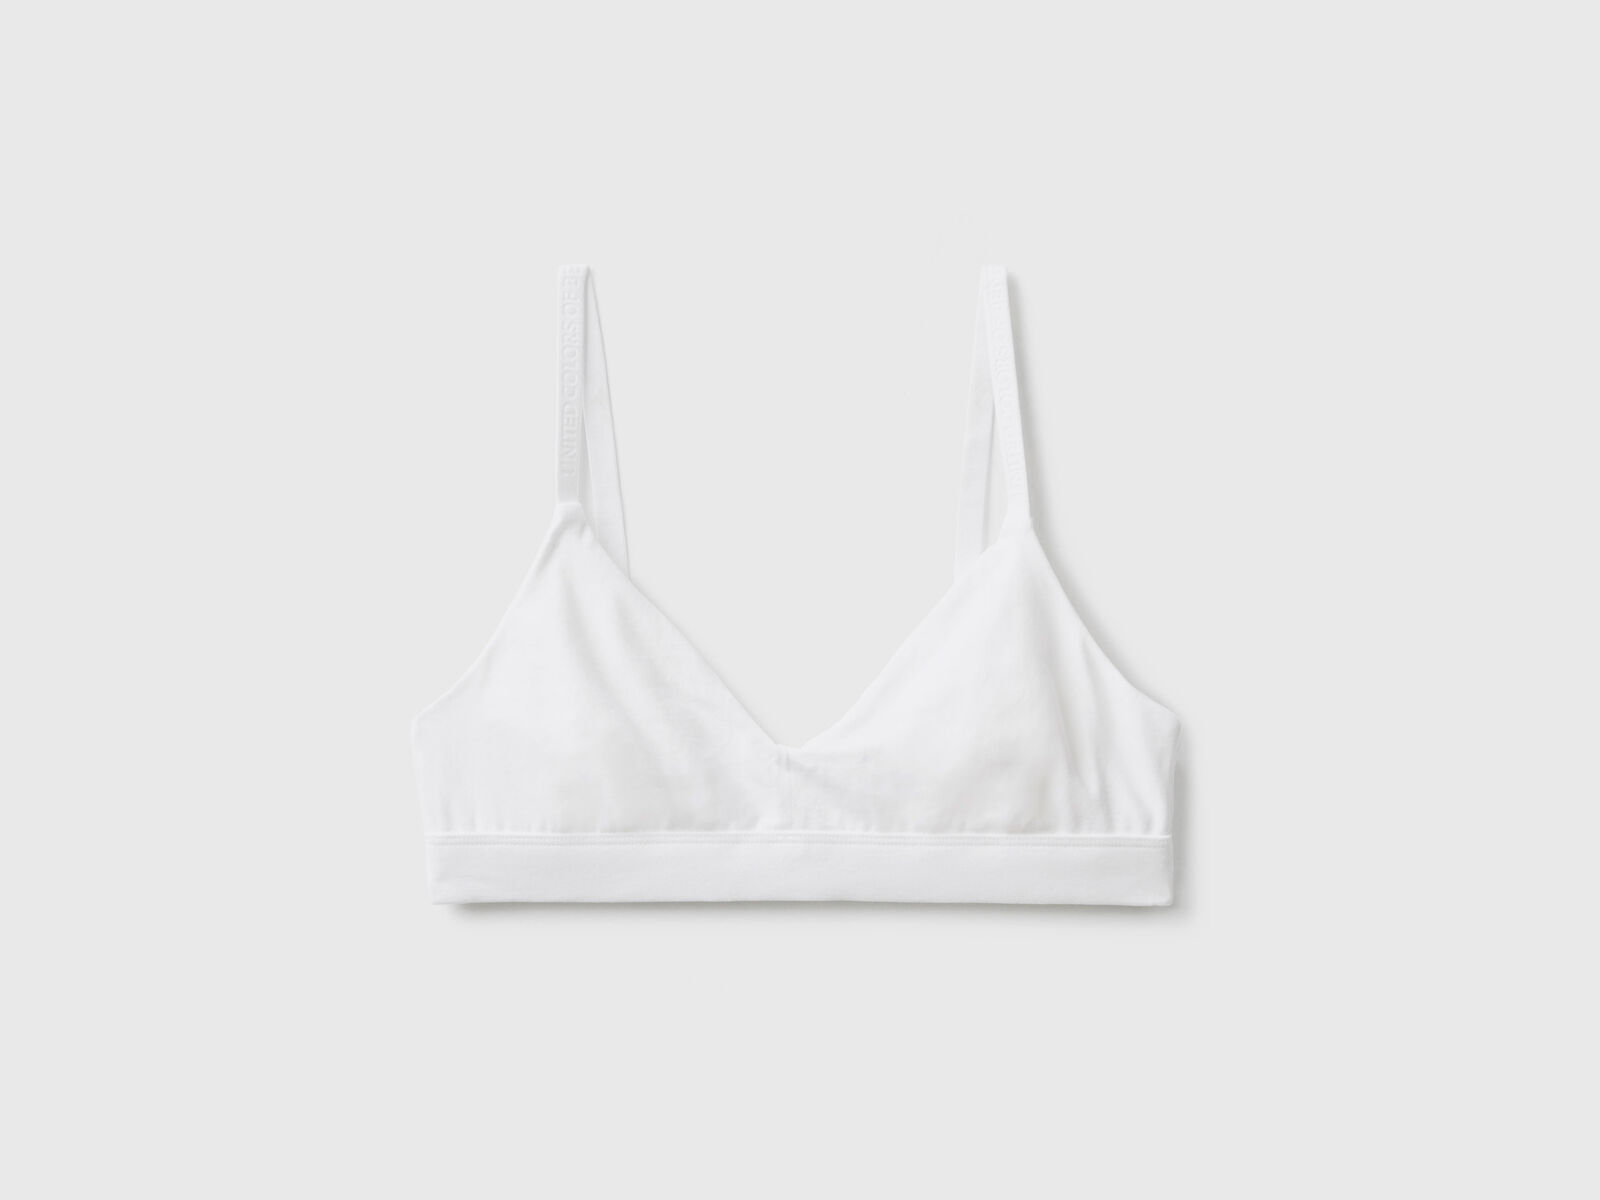 Triangle bra without padding - Black